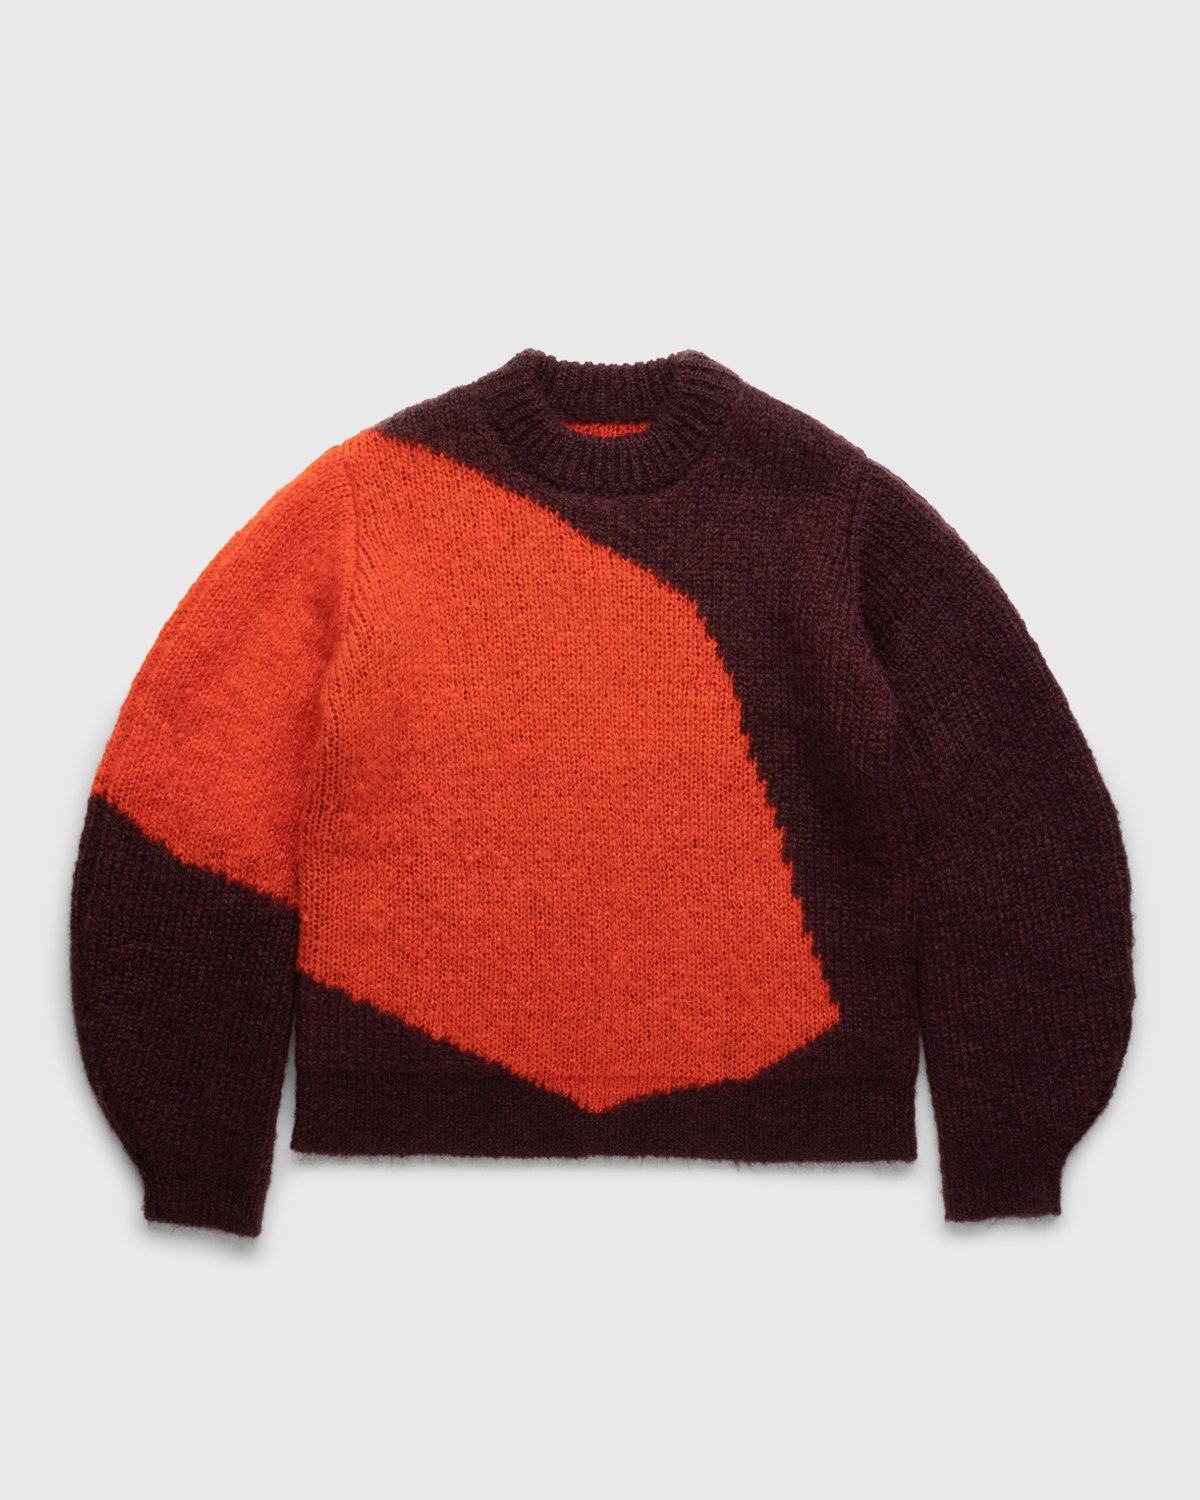 Jil Sander – Sweater Knitted Open Red - Knitwear - Red - Image 1